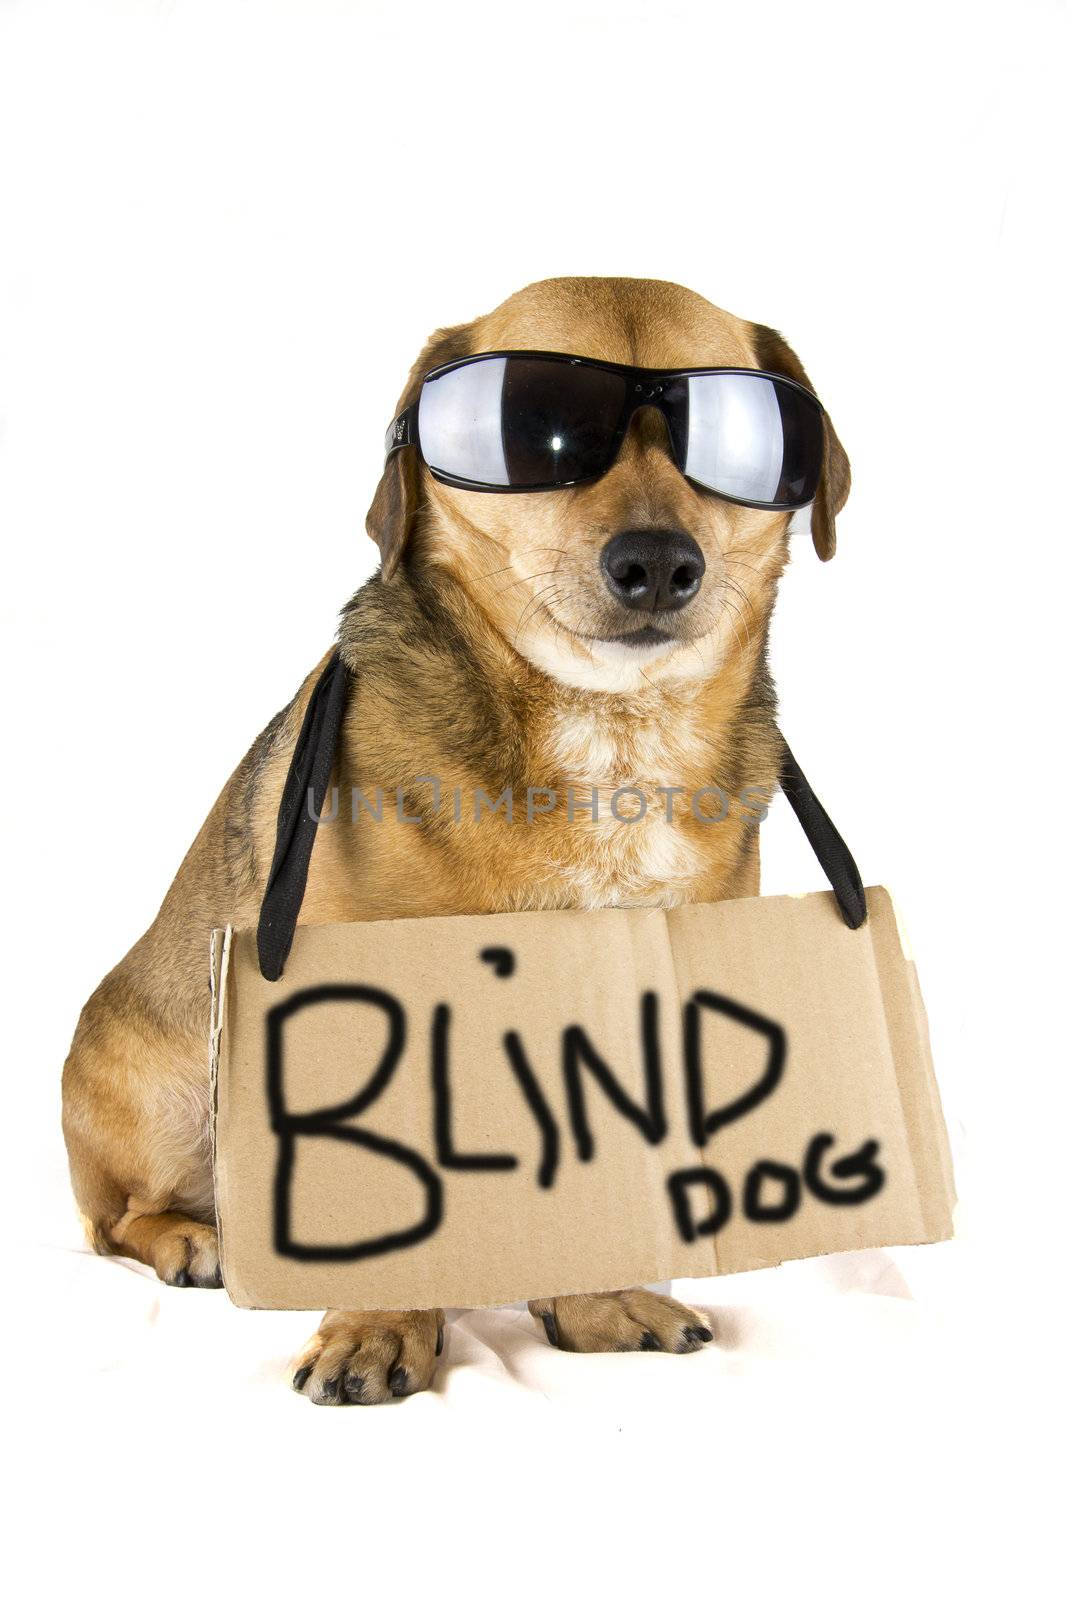 blind dog